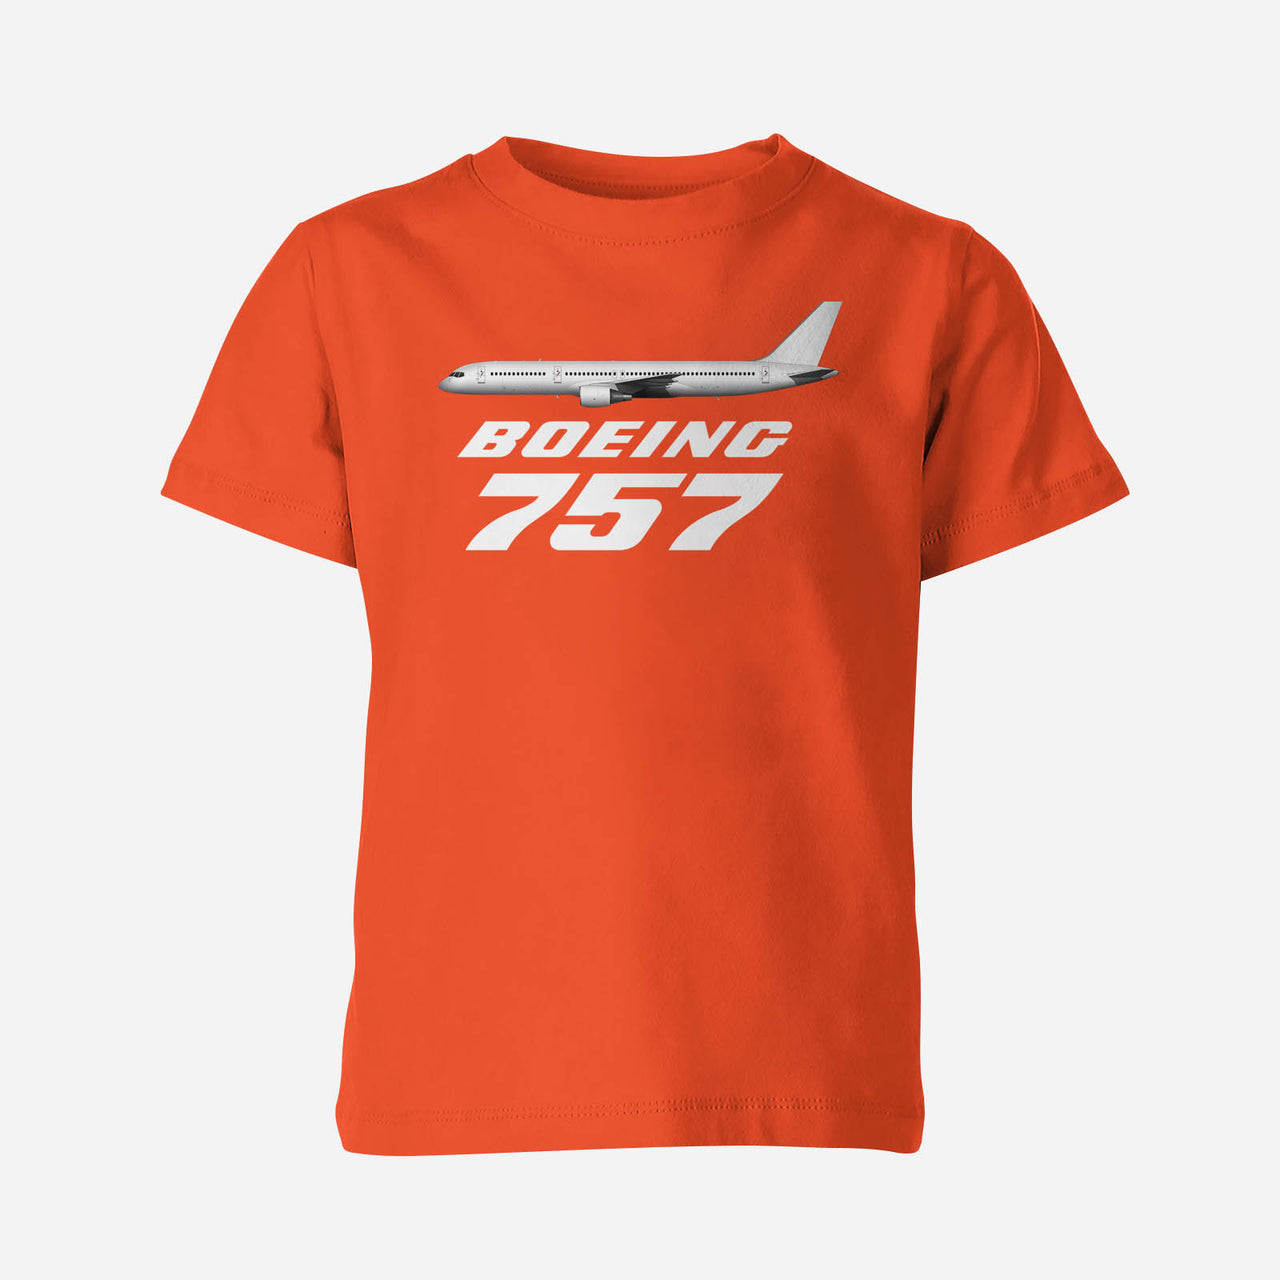 The Boeing 757 Designed Children T-Shirts